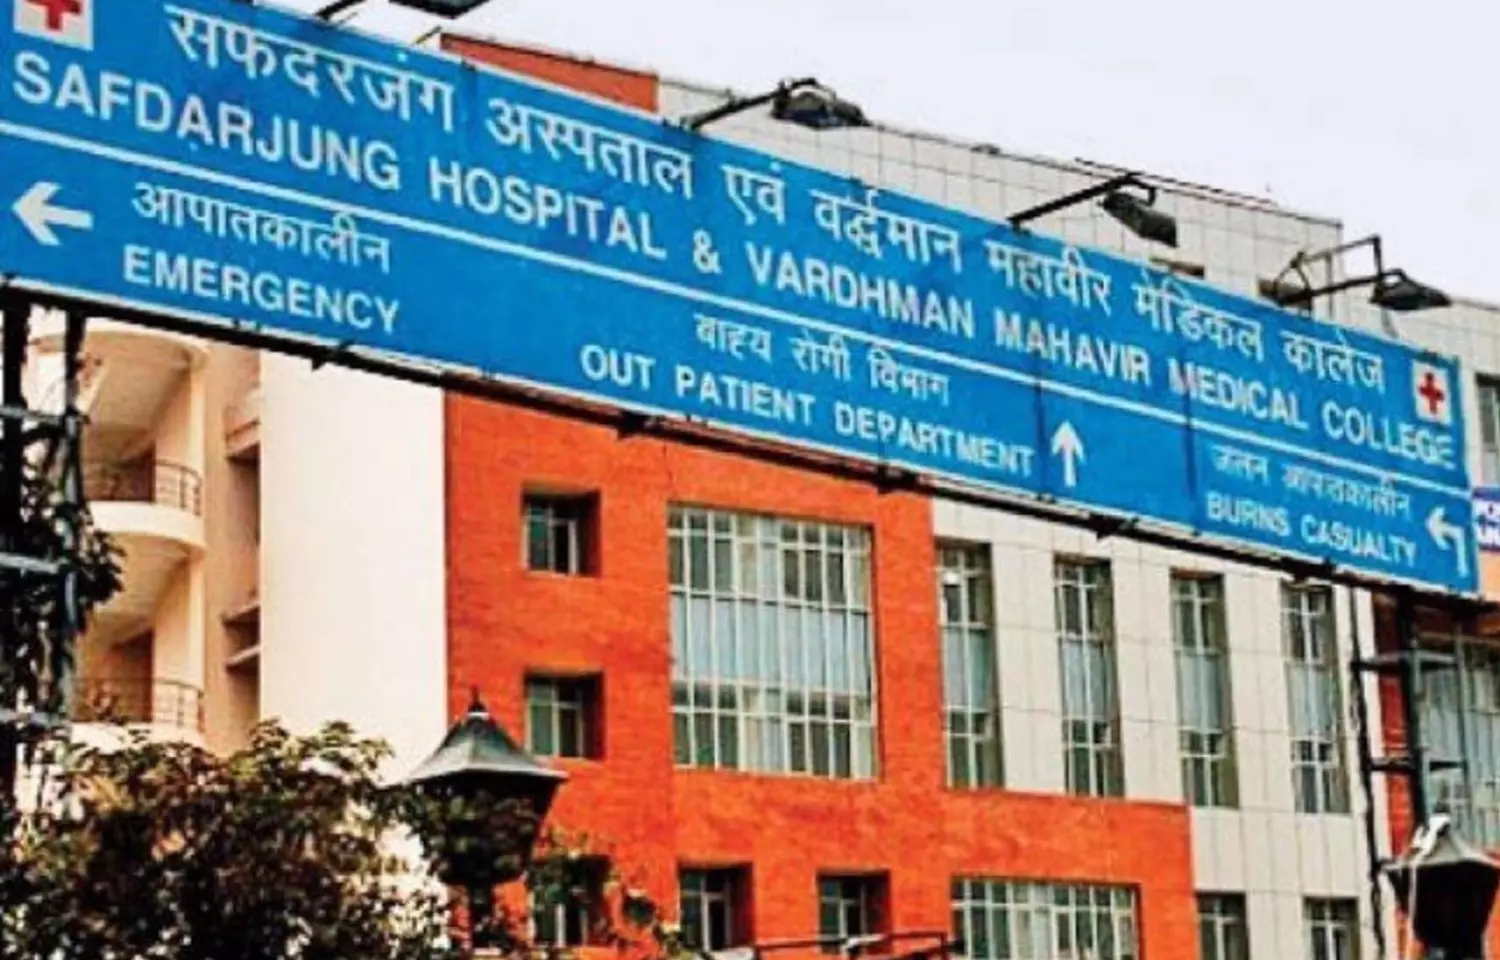 Safdarjung doctors, staff to undergo mandatory performance evaluation by HODs, says HM